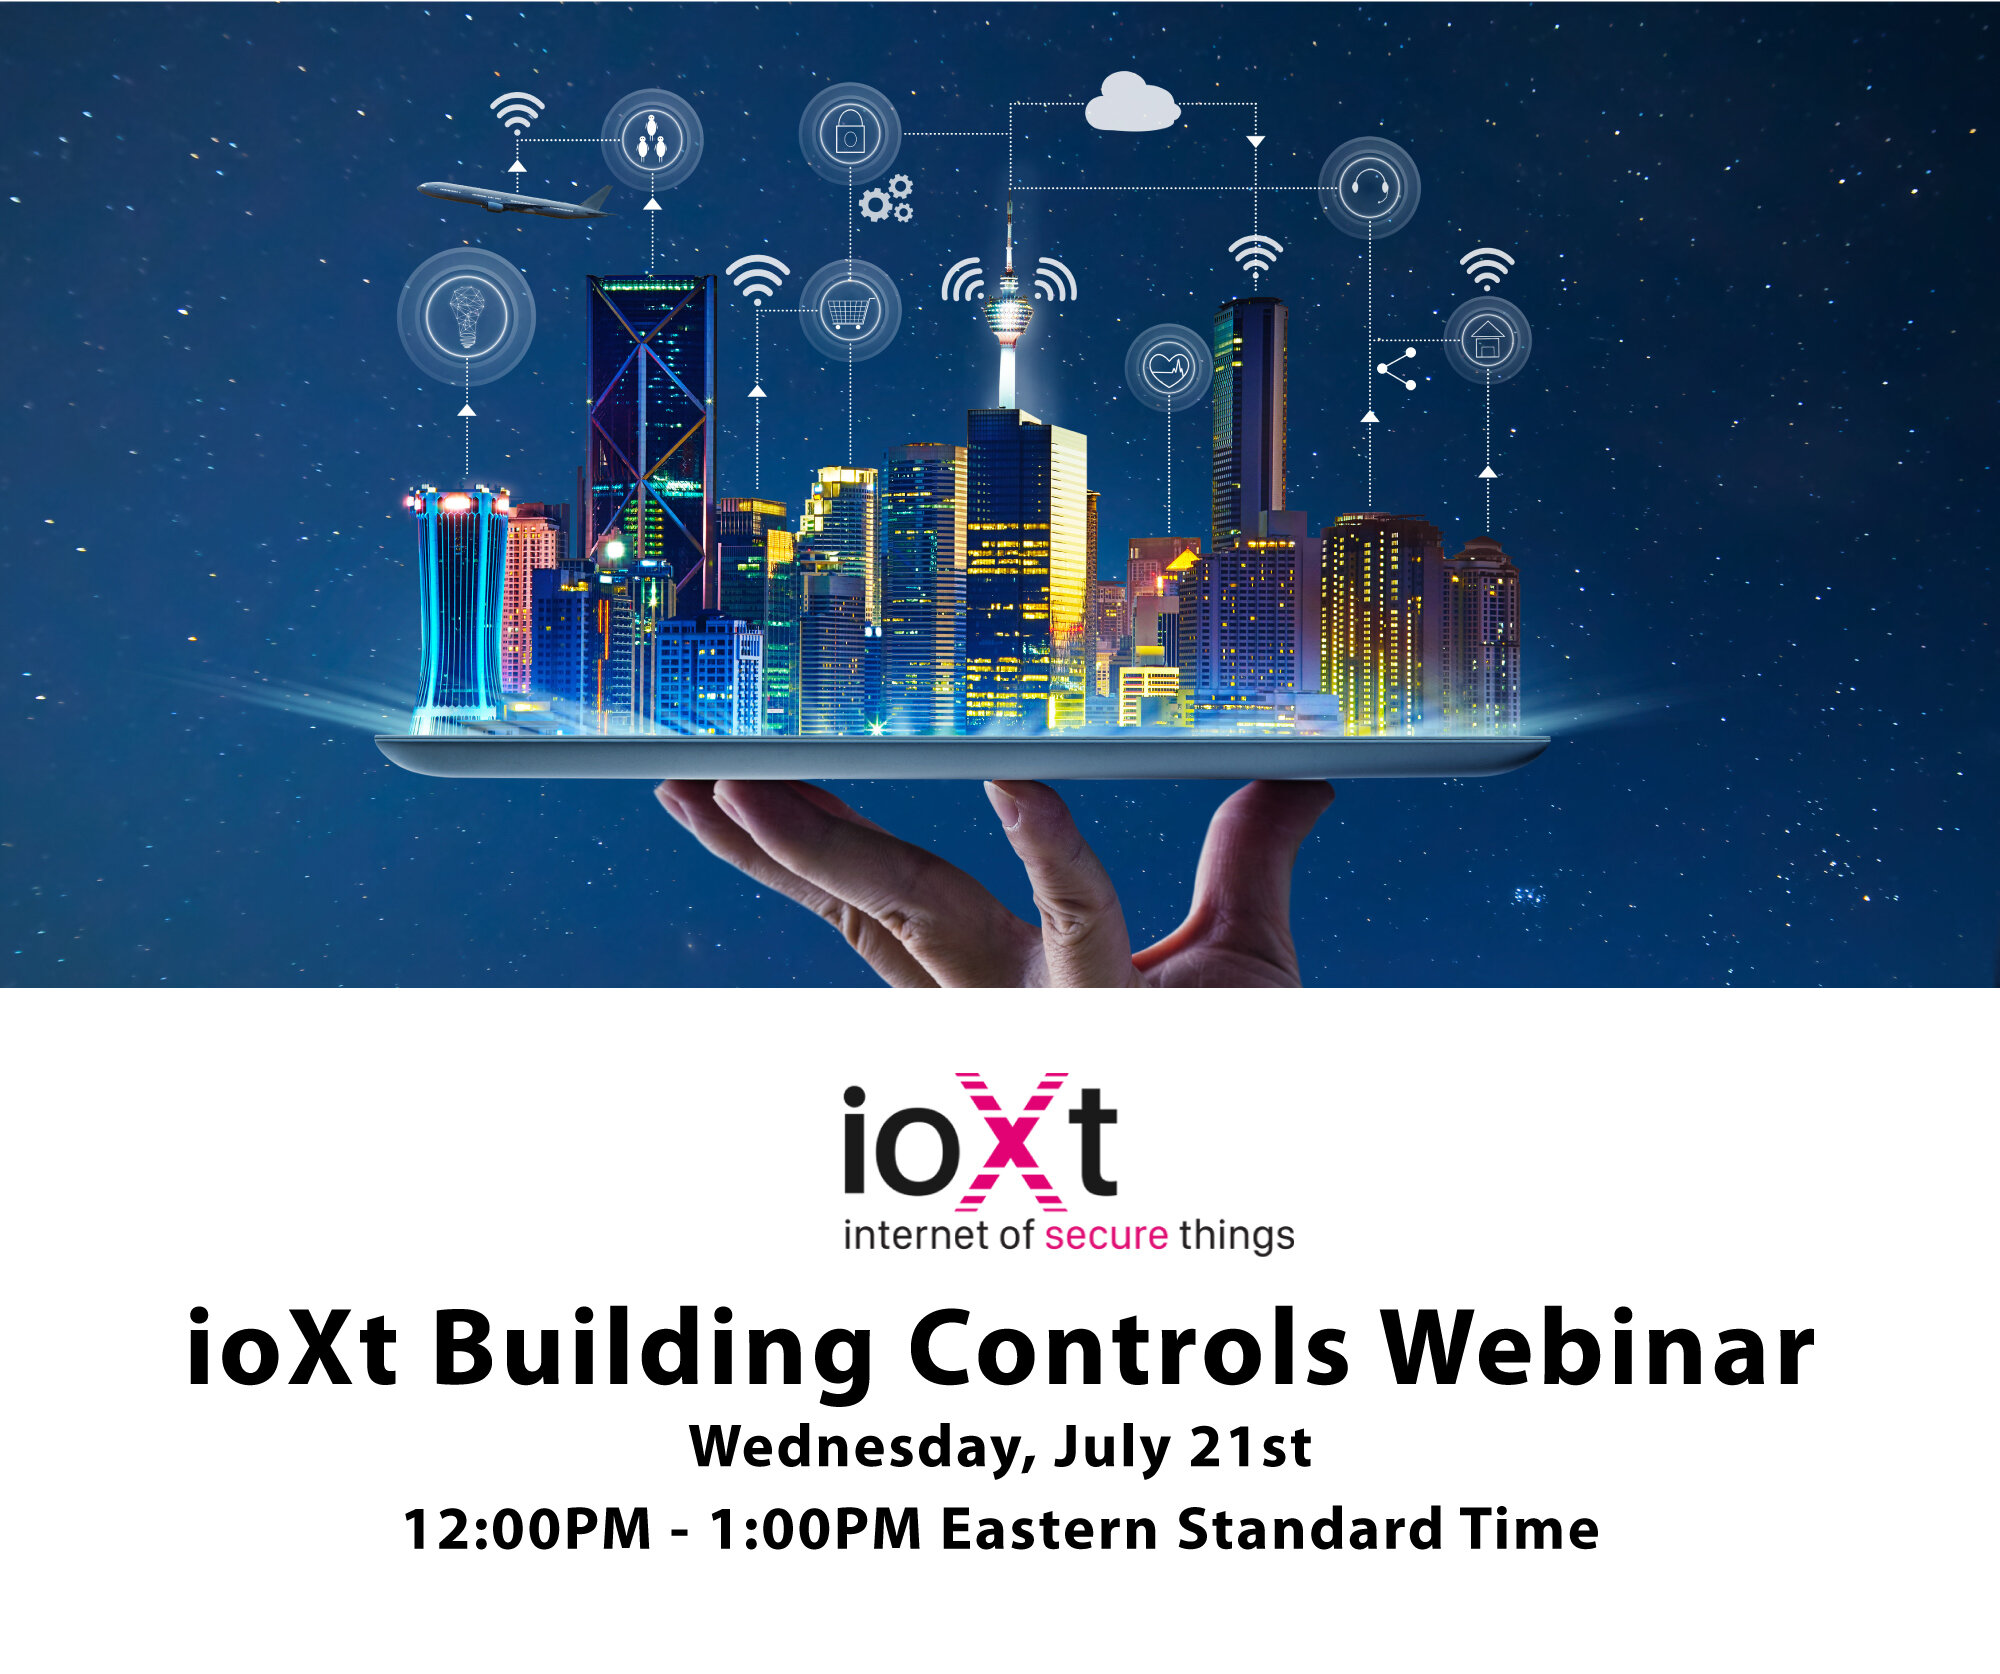 ioxt - ioxt - 建設控制 - 網路研討會 - 網路研討會.jpg